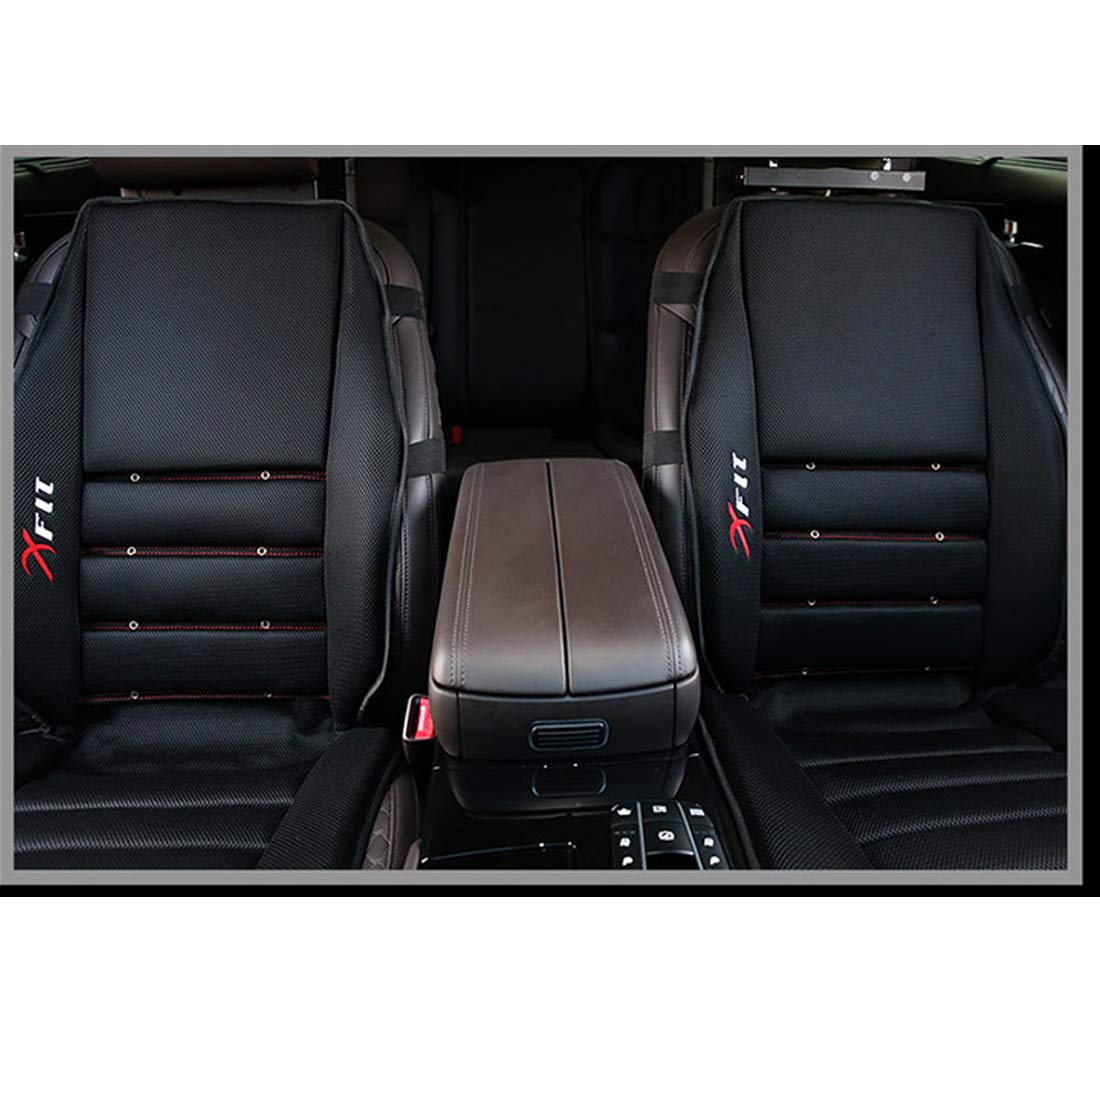 XFIT 4D Wide Ventilated Mesh Cooling Car Front Seat Korea E Market